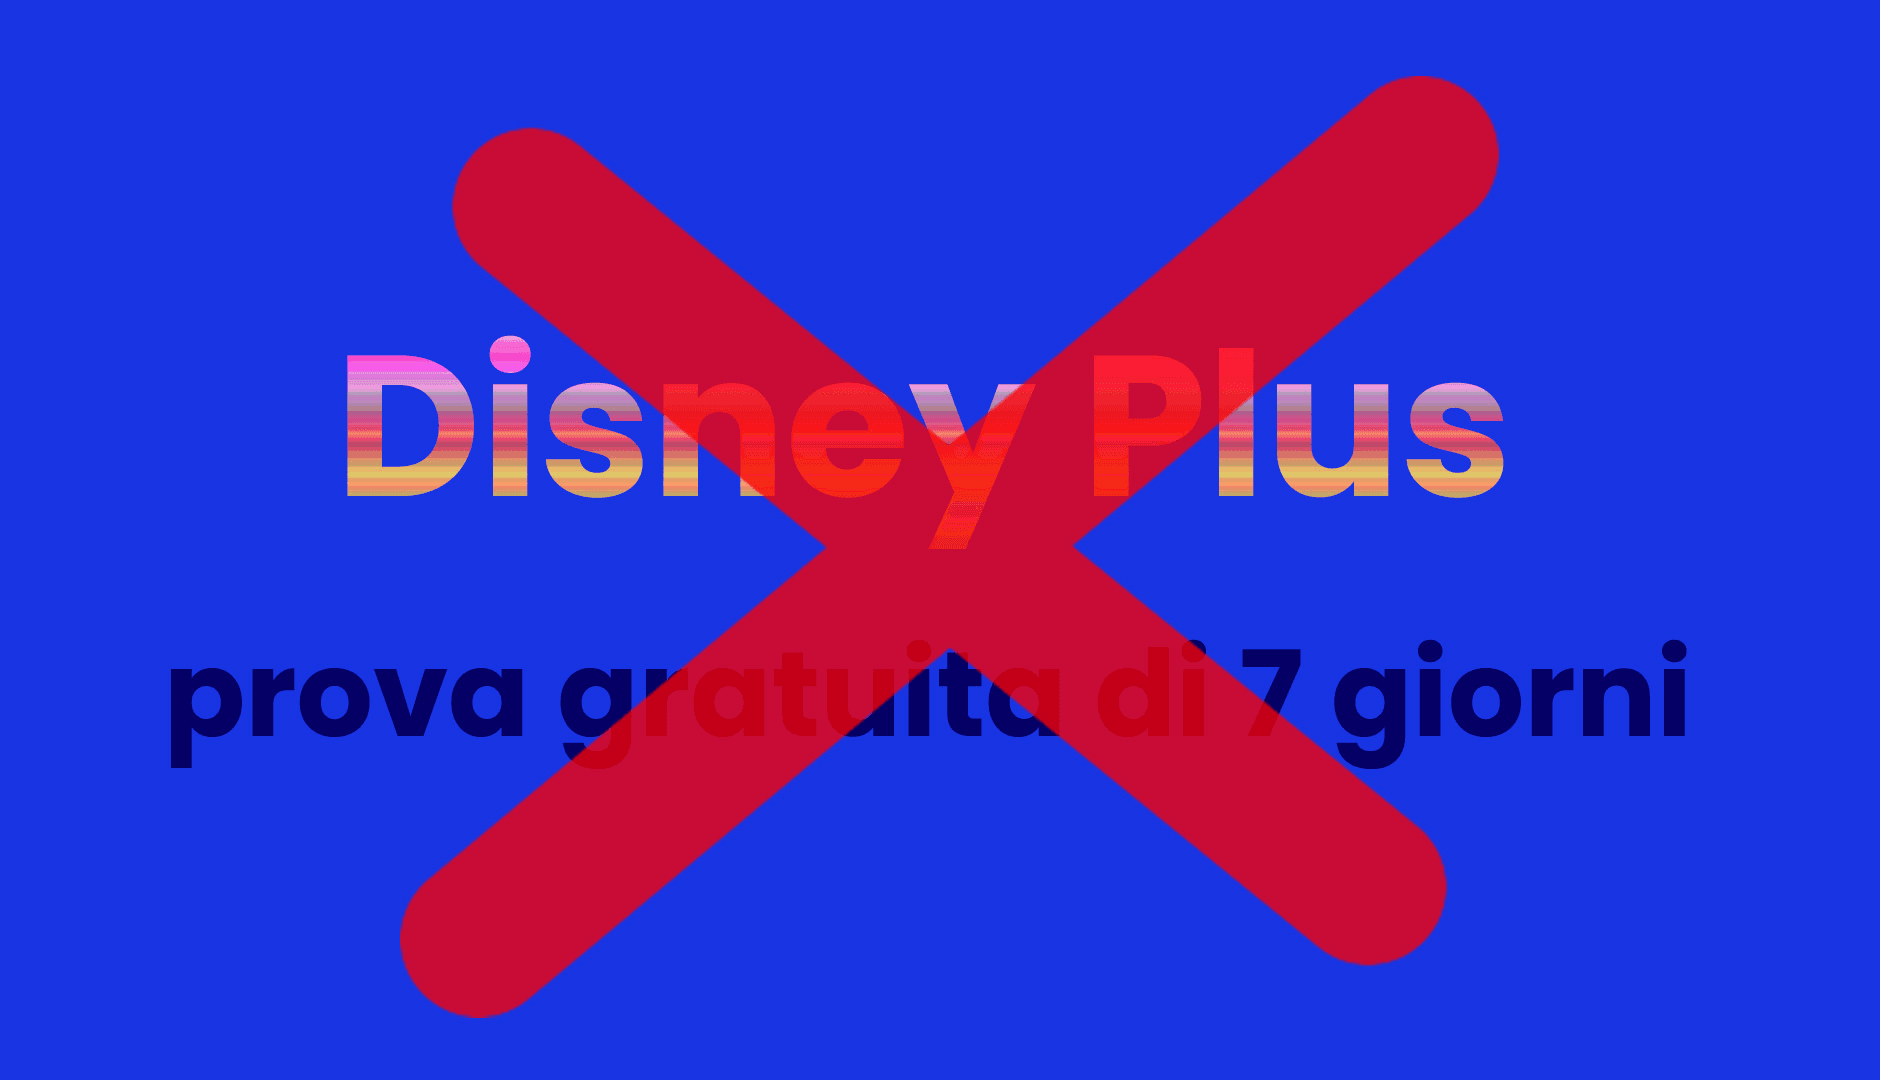 Disney Plus prova gratuita addio! C'era una prova gratuita  